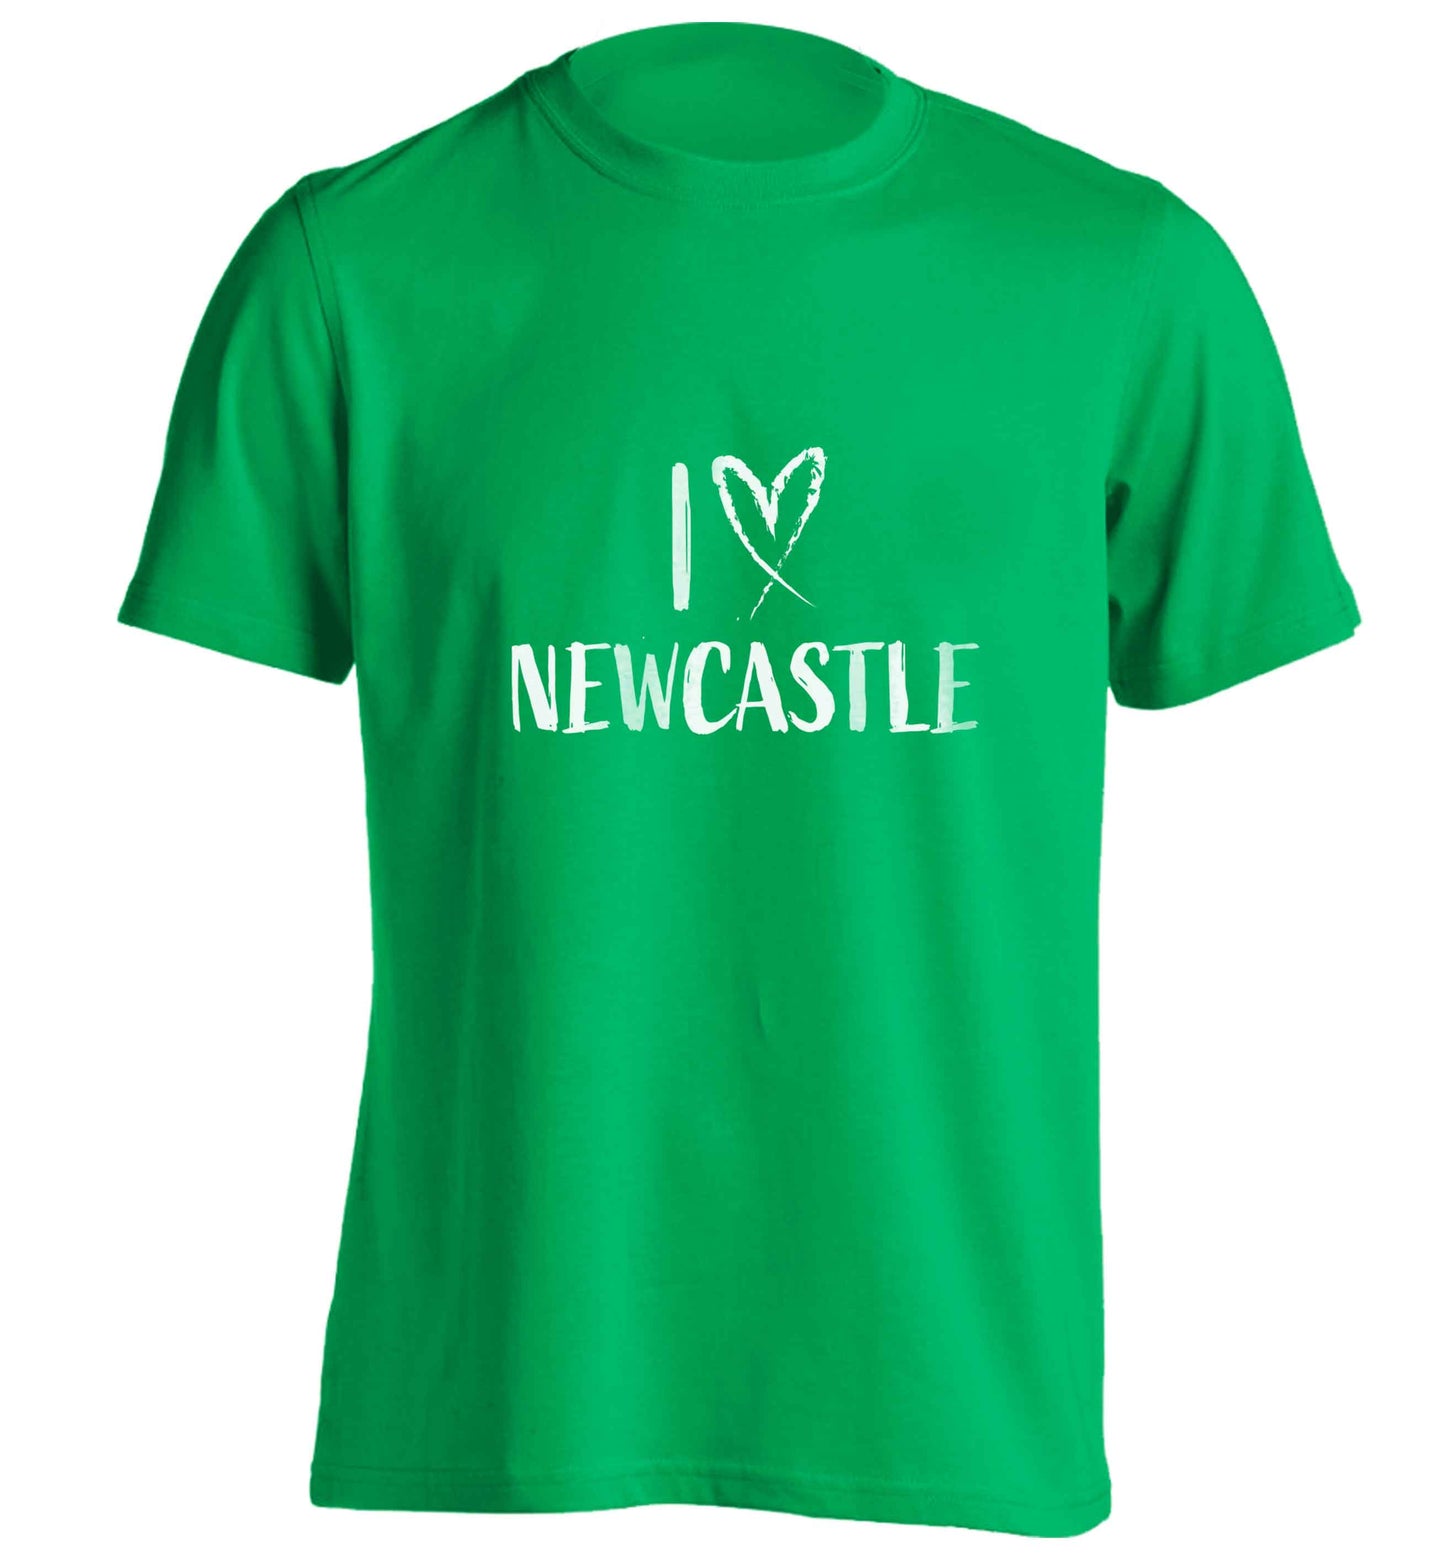 I love Newcastle adults unisex green Tshirt 2XL